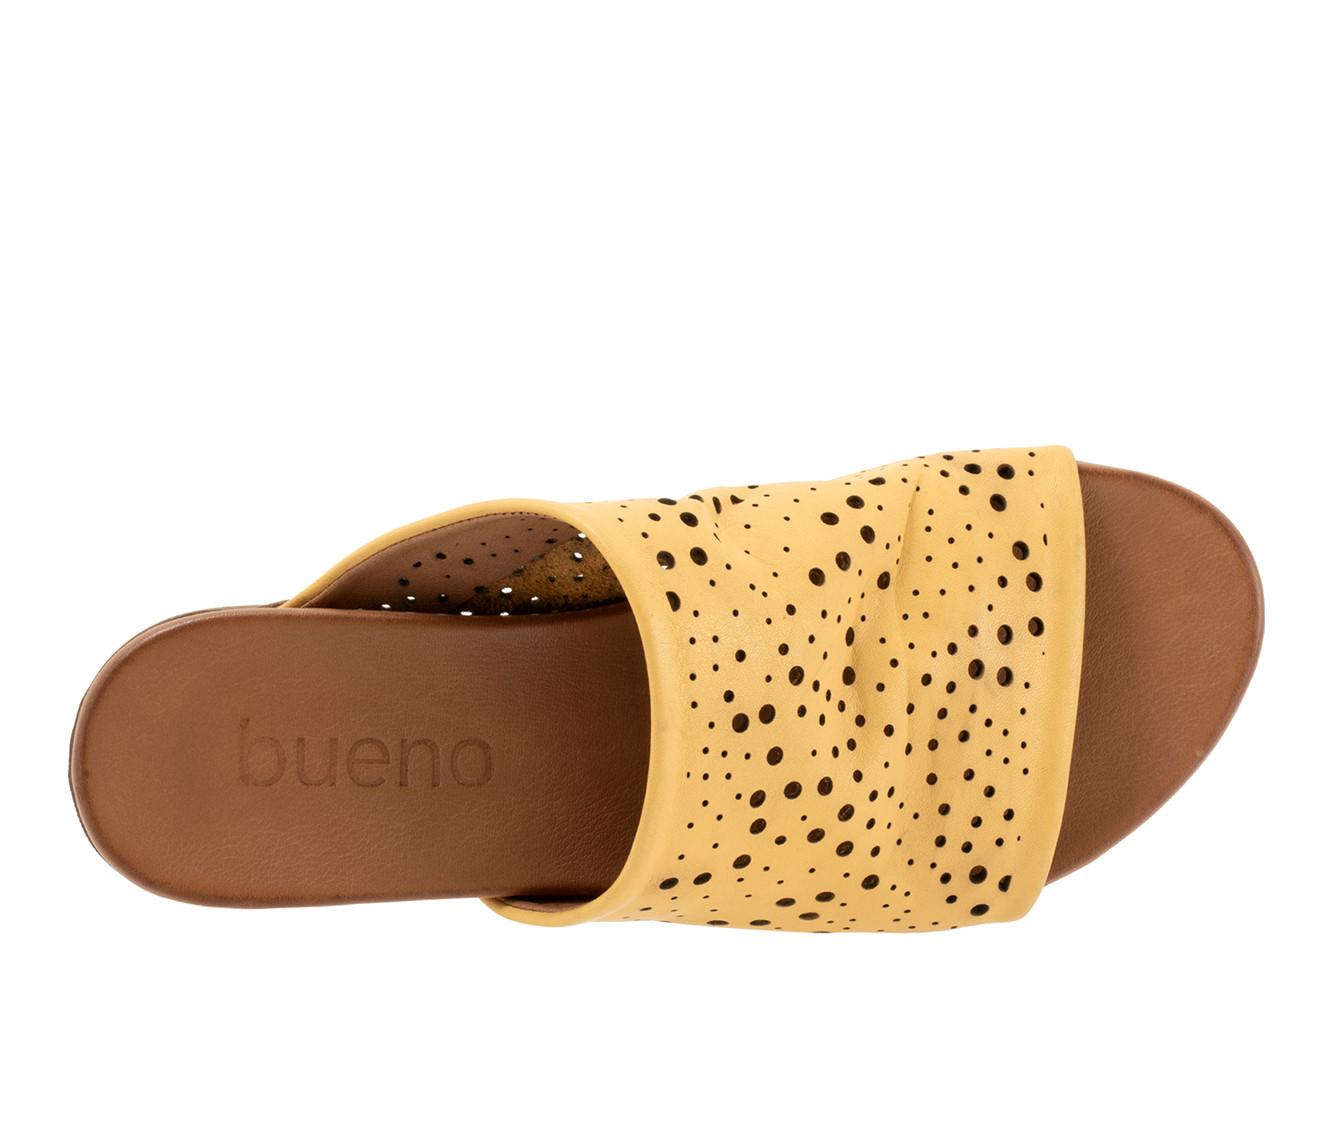 Women's Bueno Turner Perf Sandals